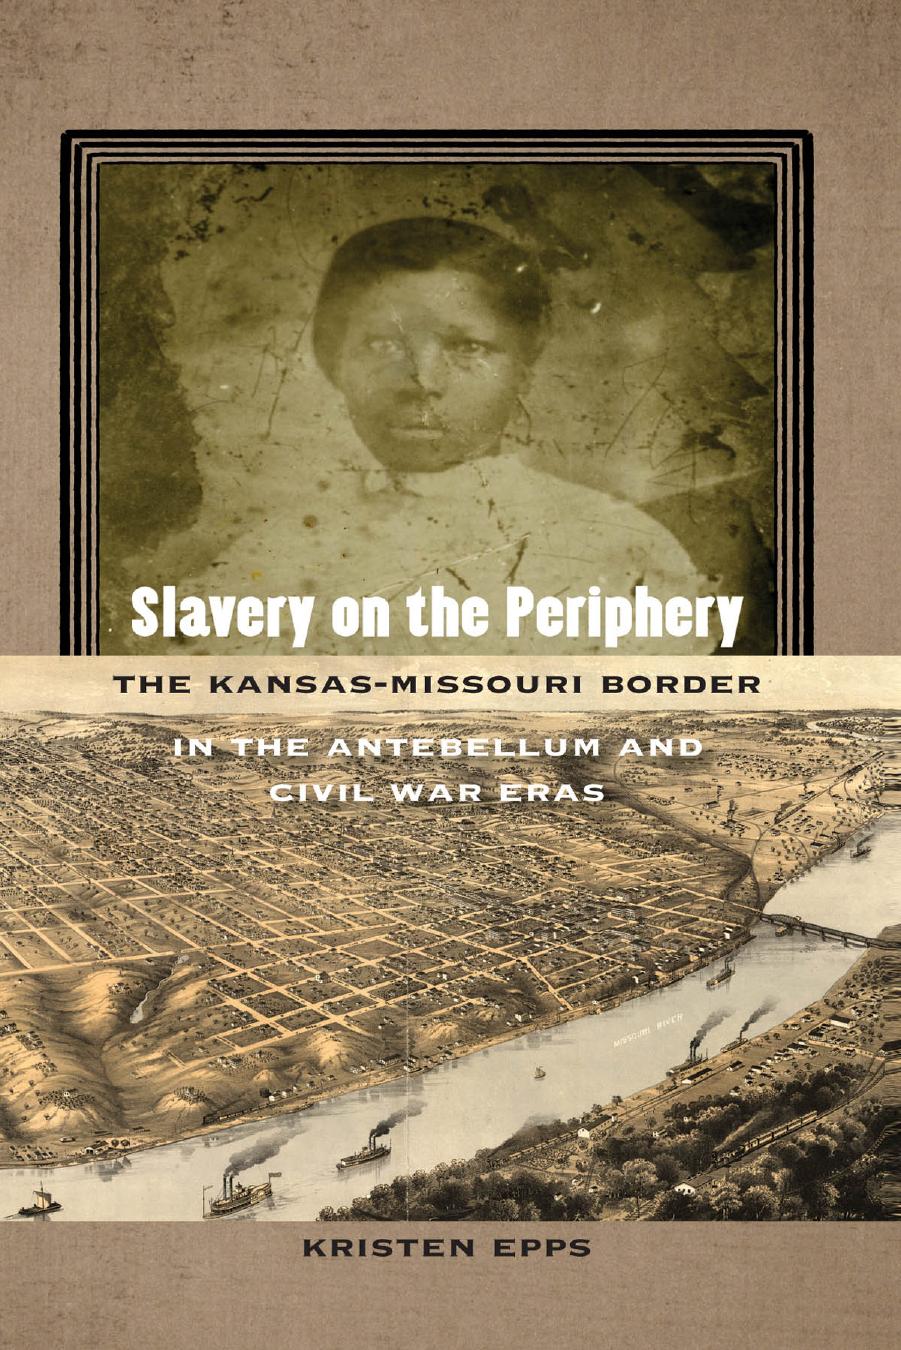 Slavery on the Periphery: The Kansas-Missouri Border in the Antebellum and Civil War Eras by Kristen Epps